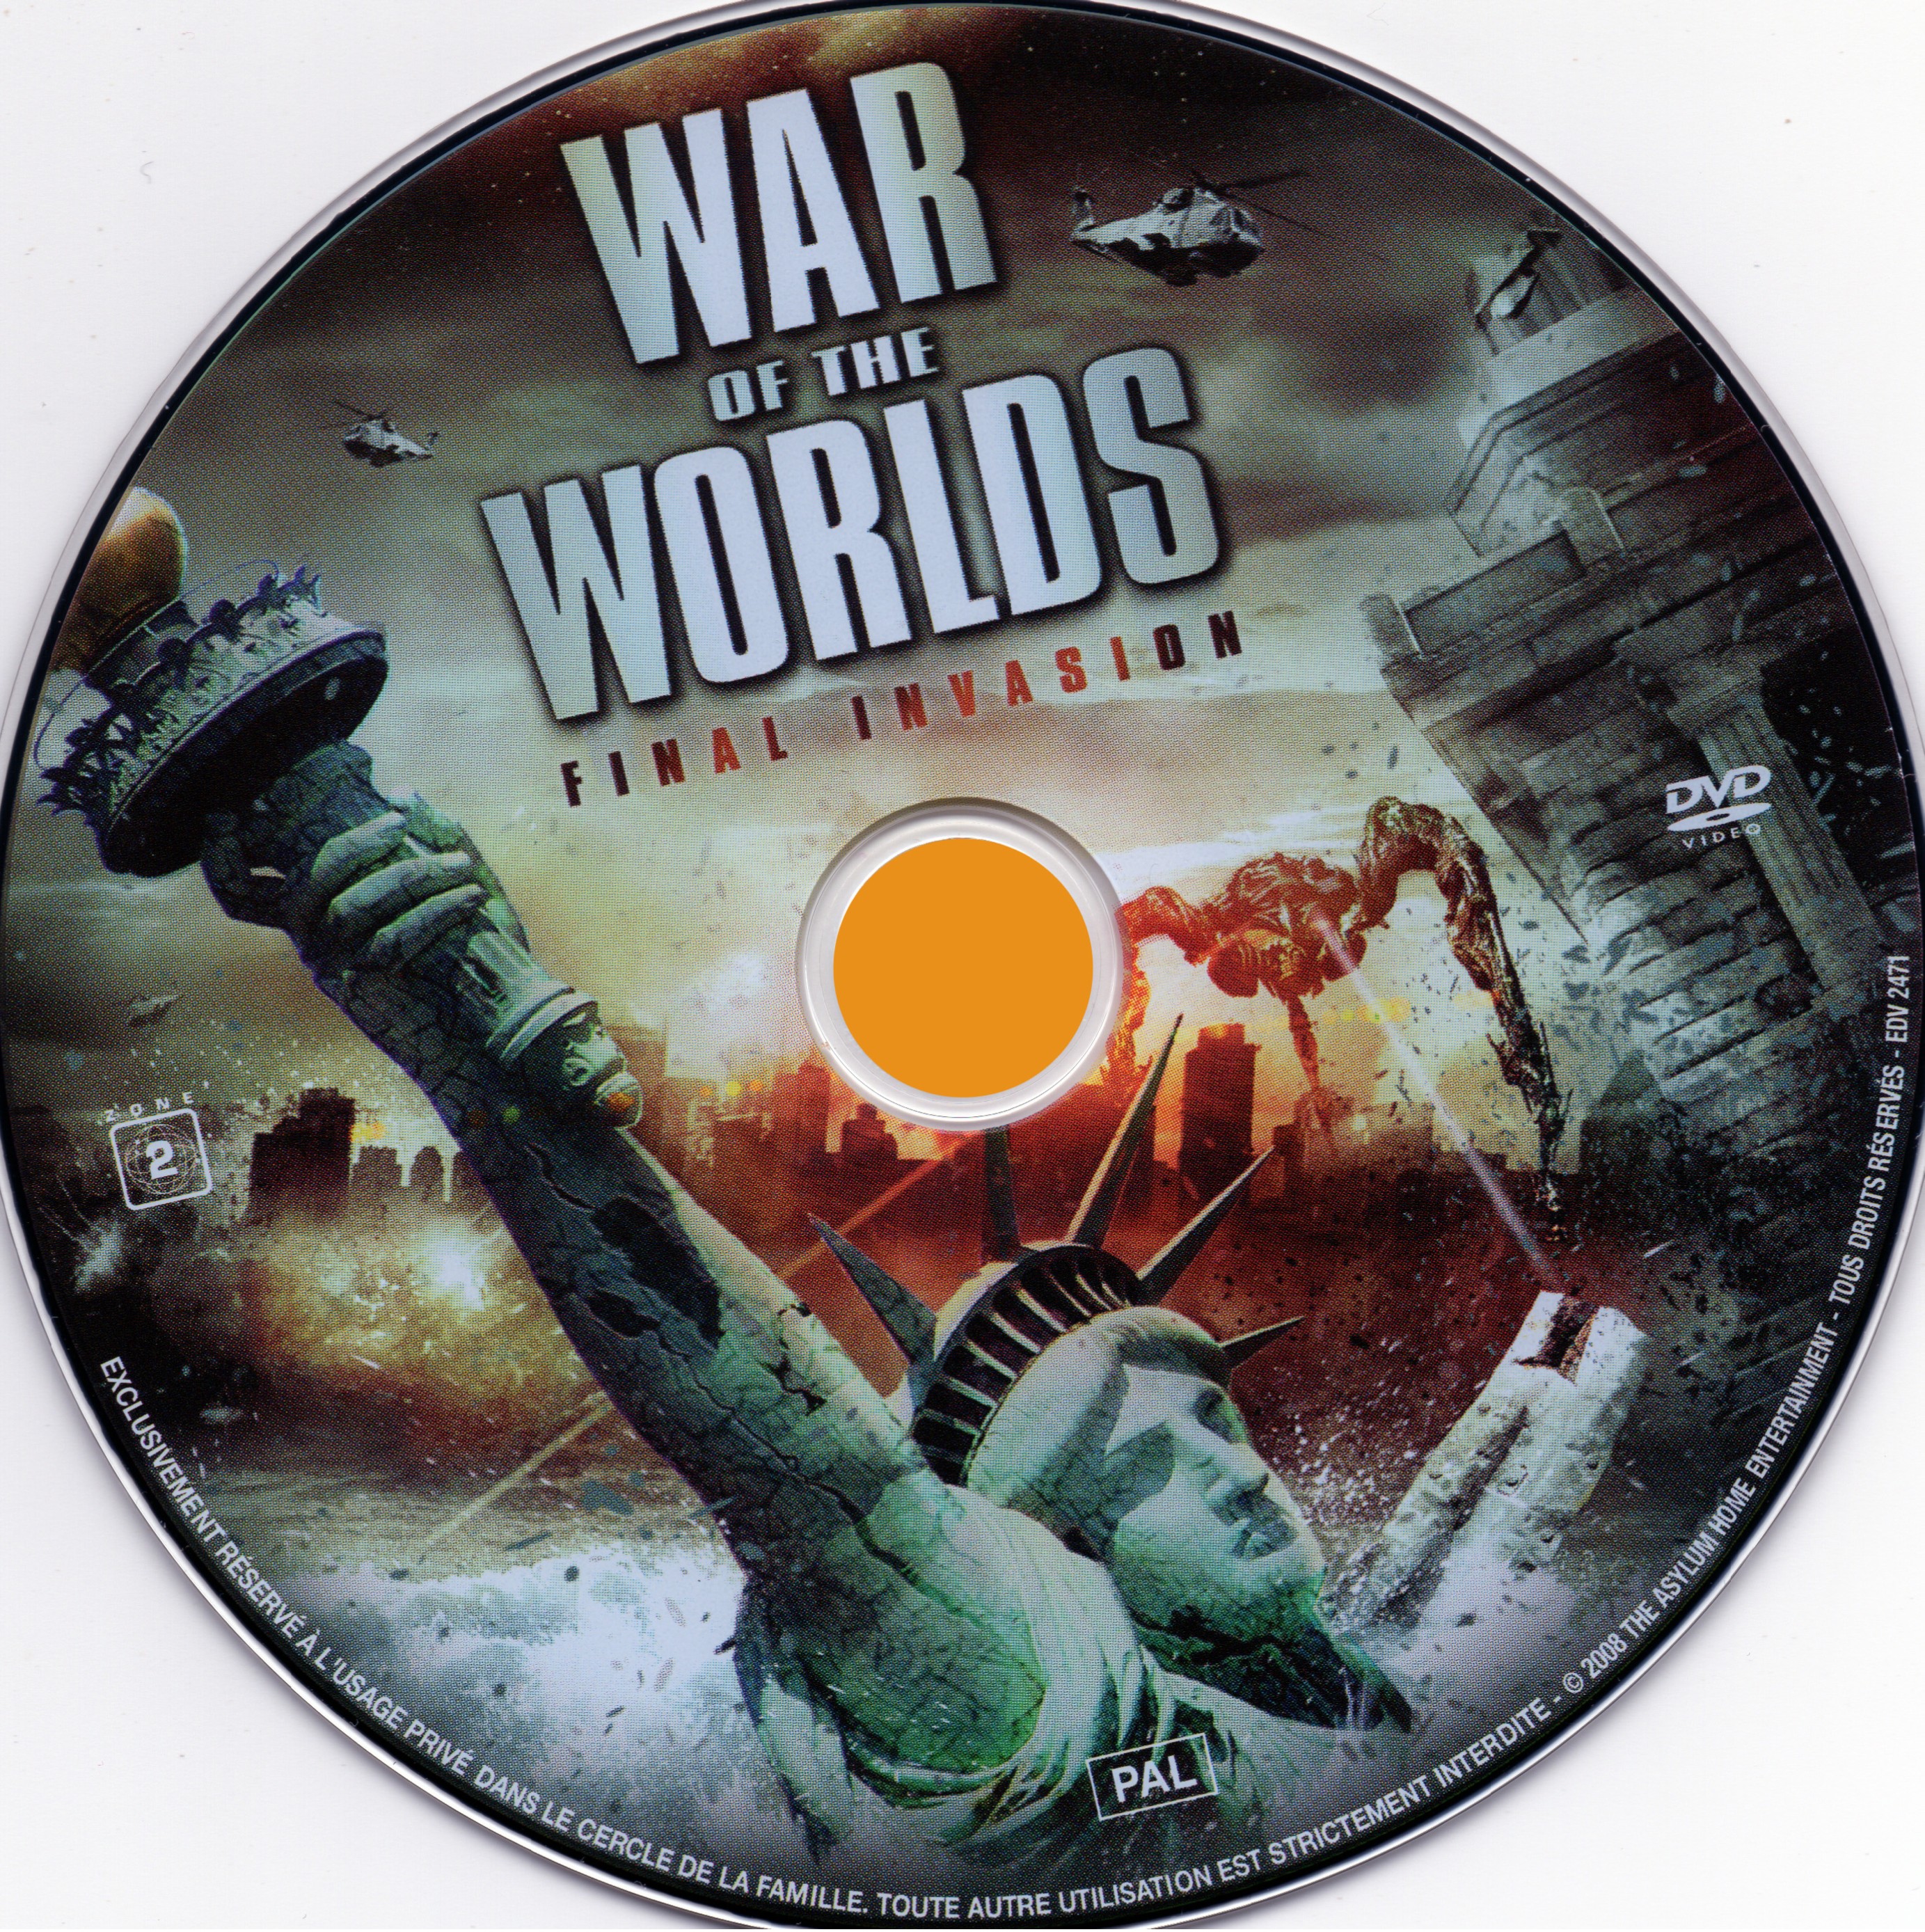 War of the worlds Final Invasion